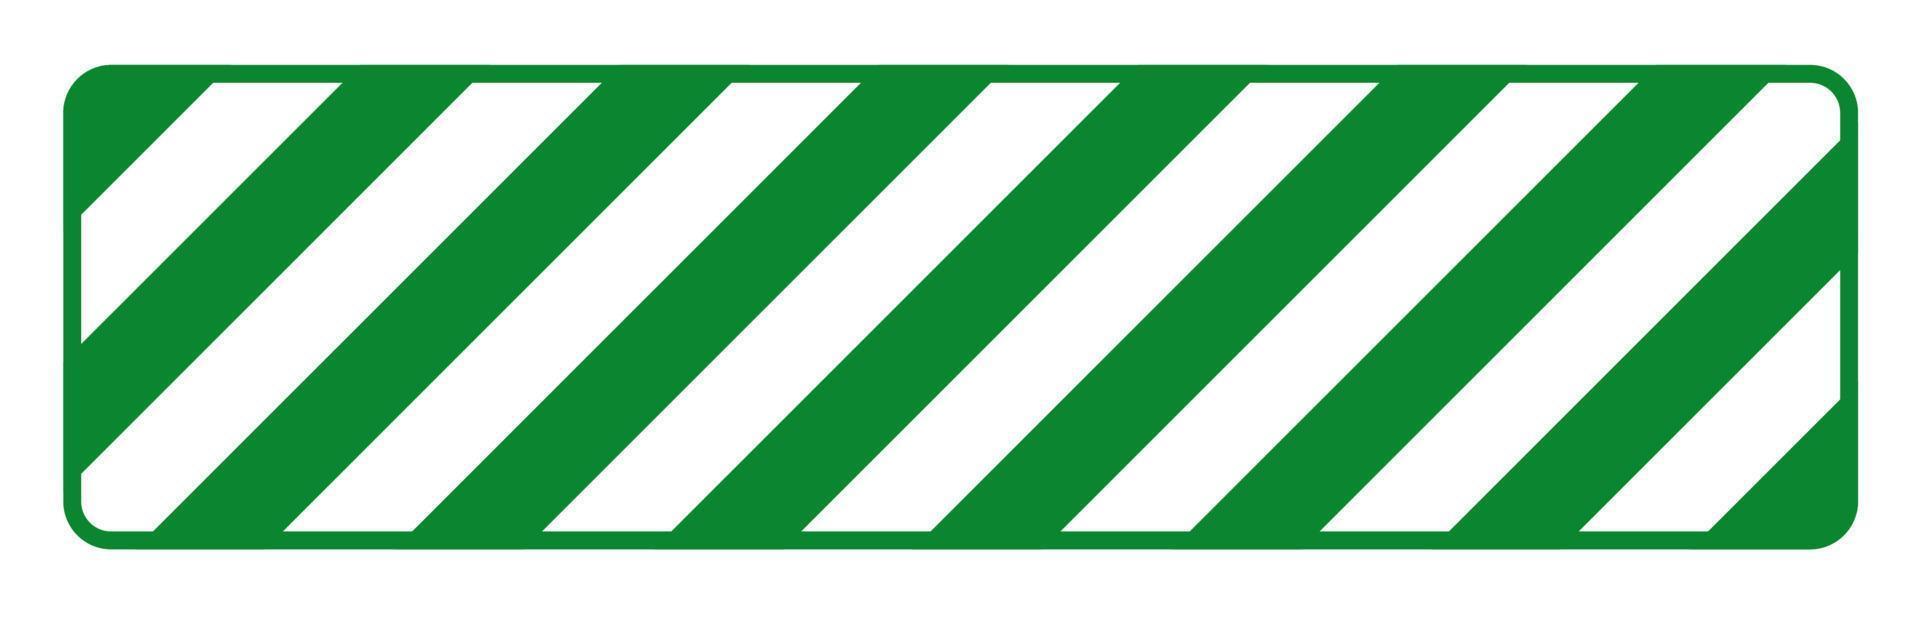 sinal de chão verde listrado branco sobre fundo branco vetor